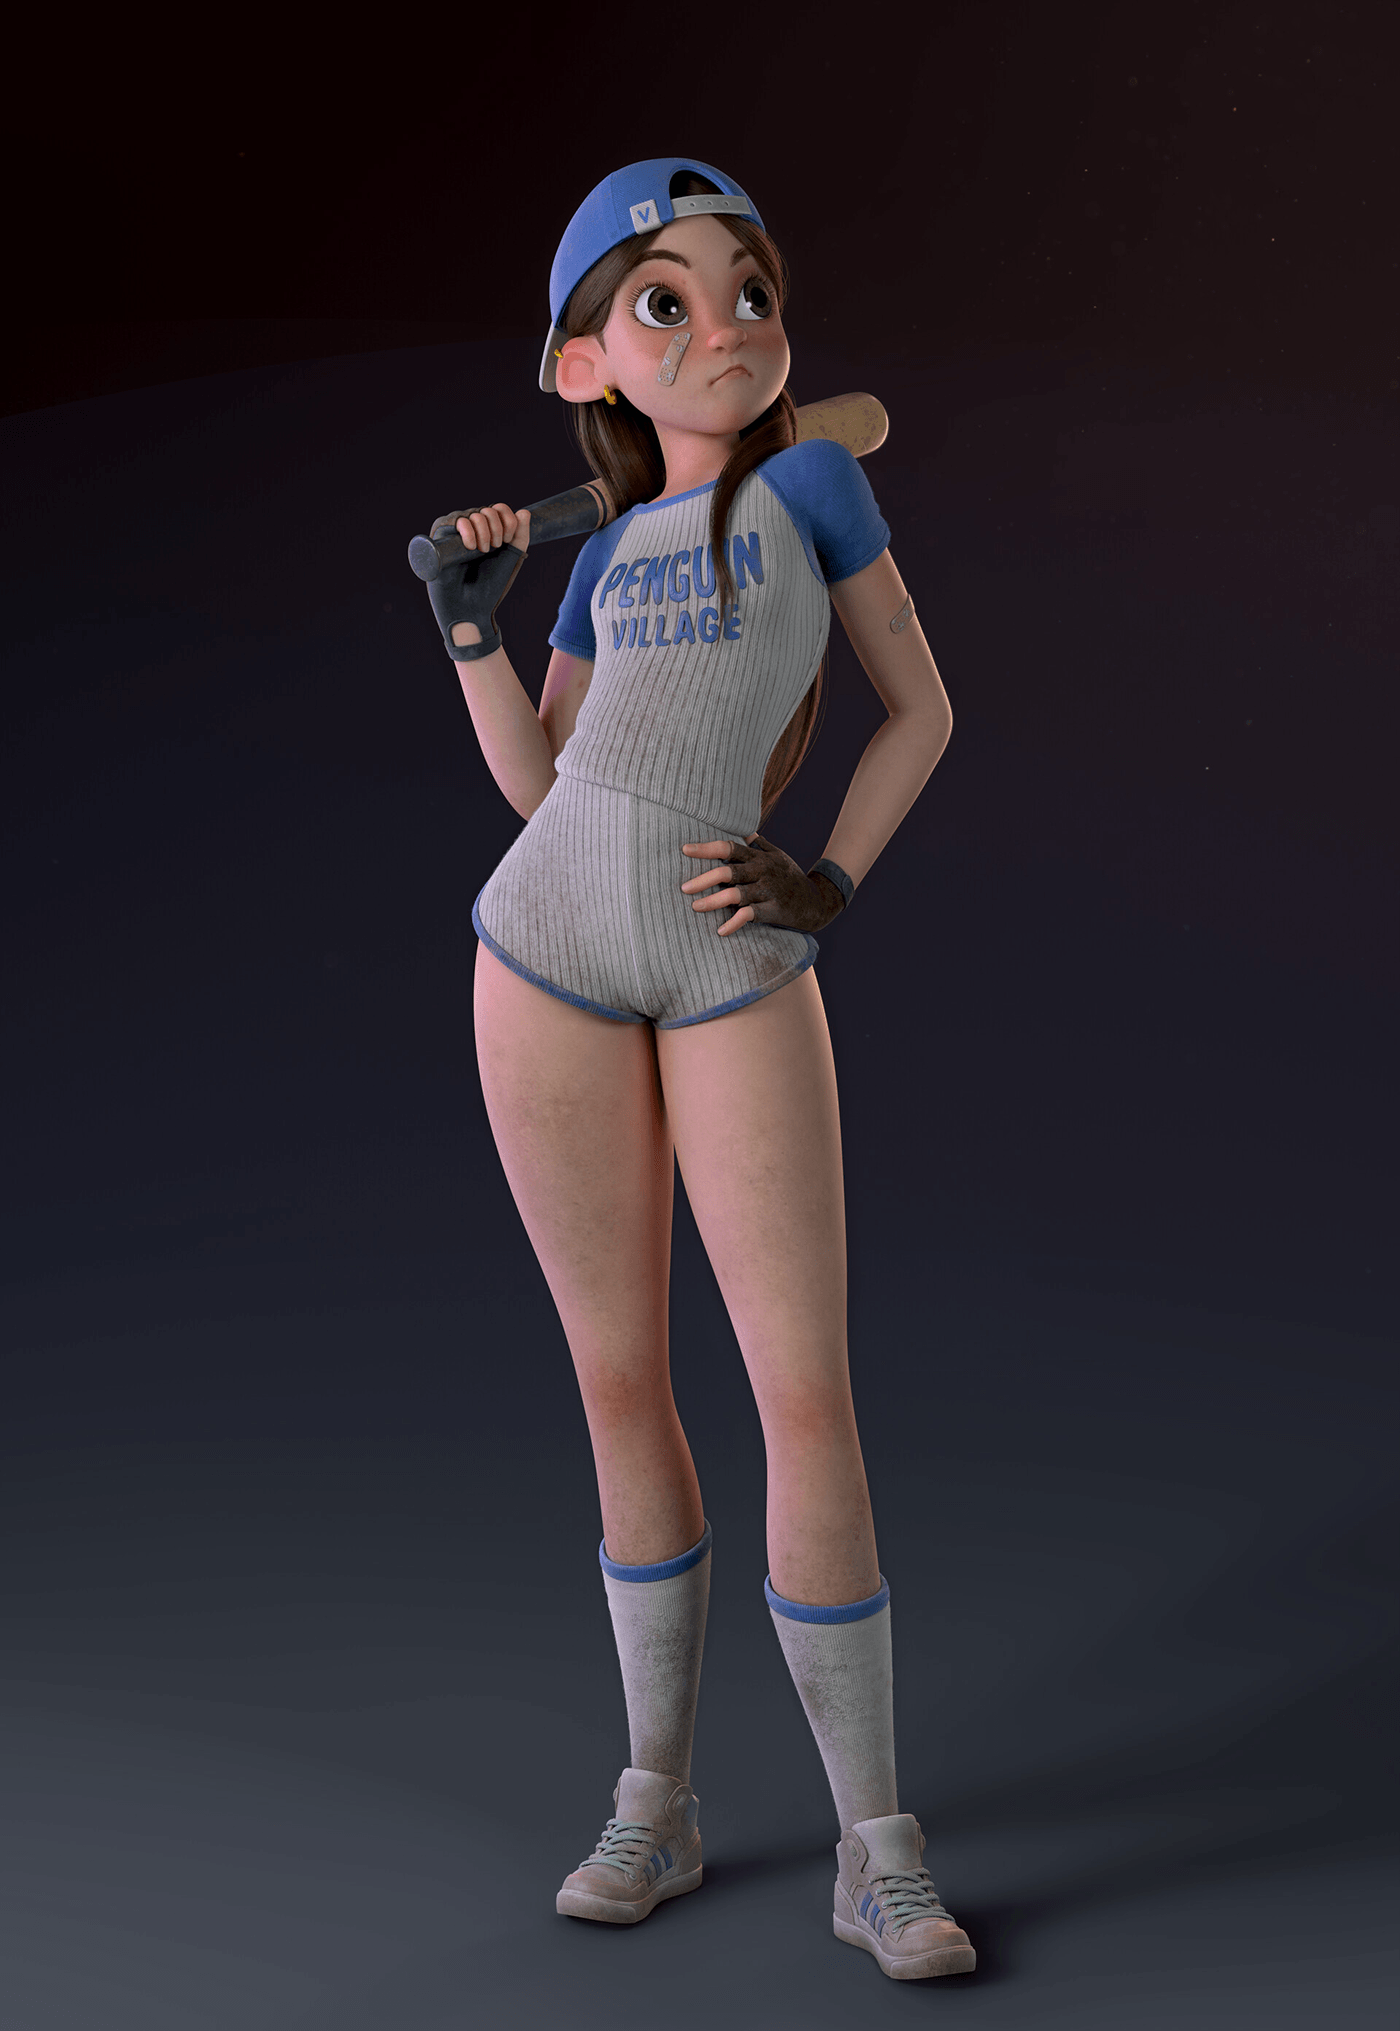 3D 3D Character 3d modeling character modeling cartoon baseball grooming Clothing rendering digital 3d